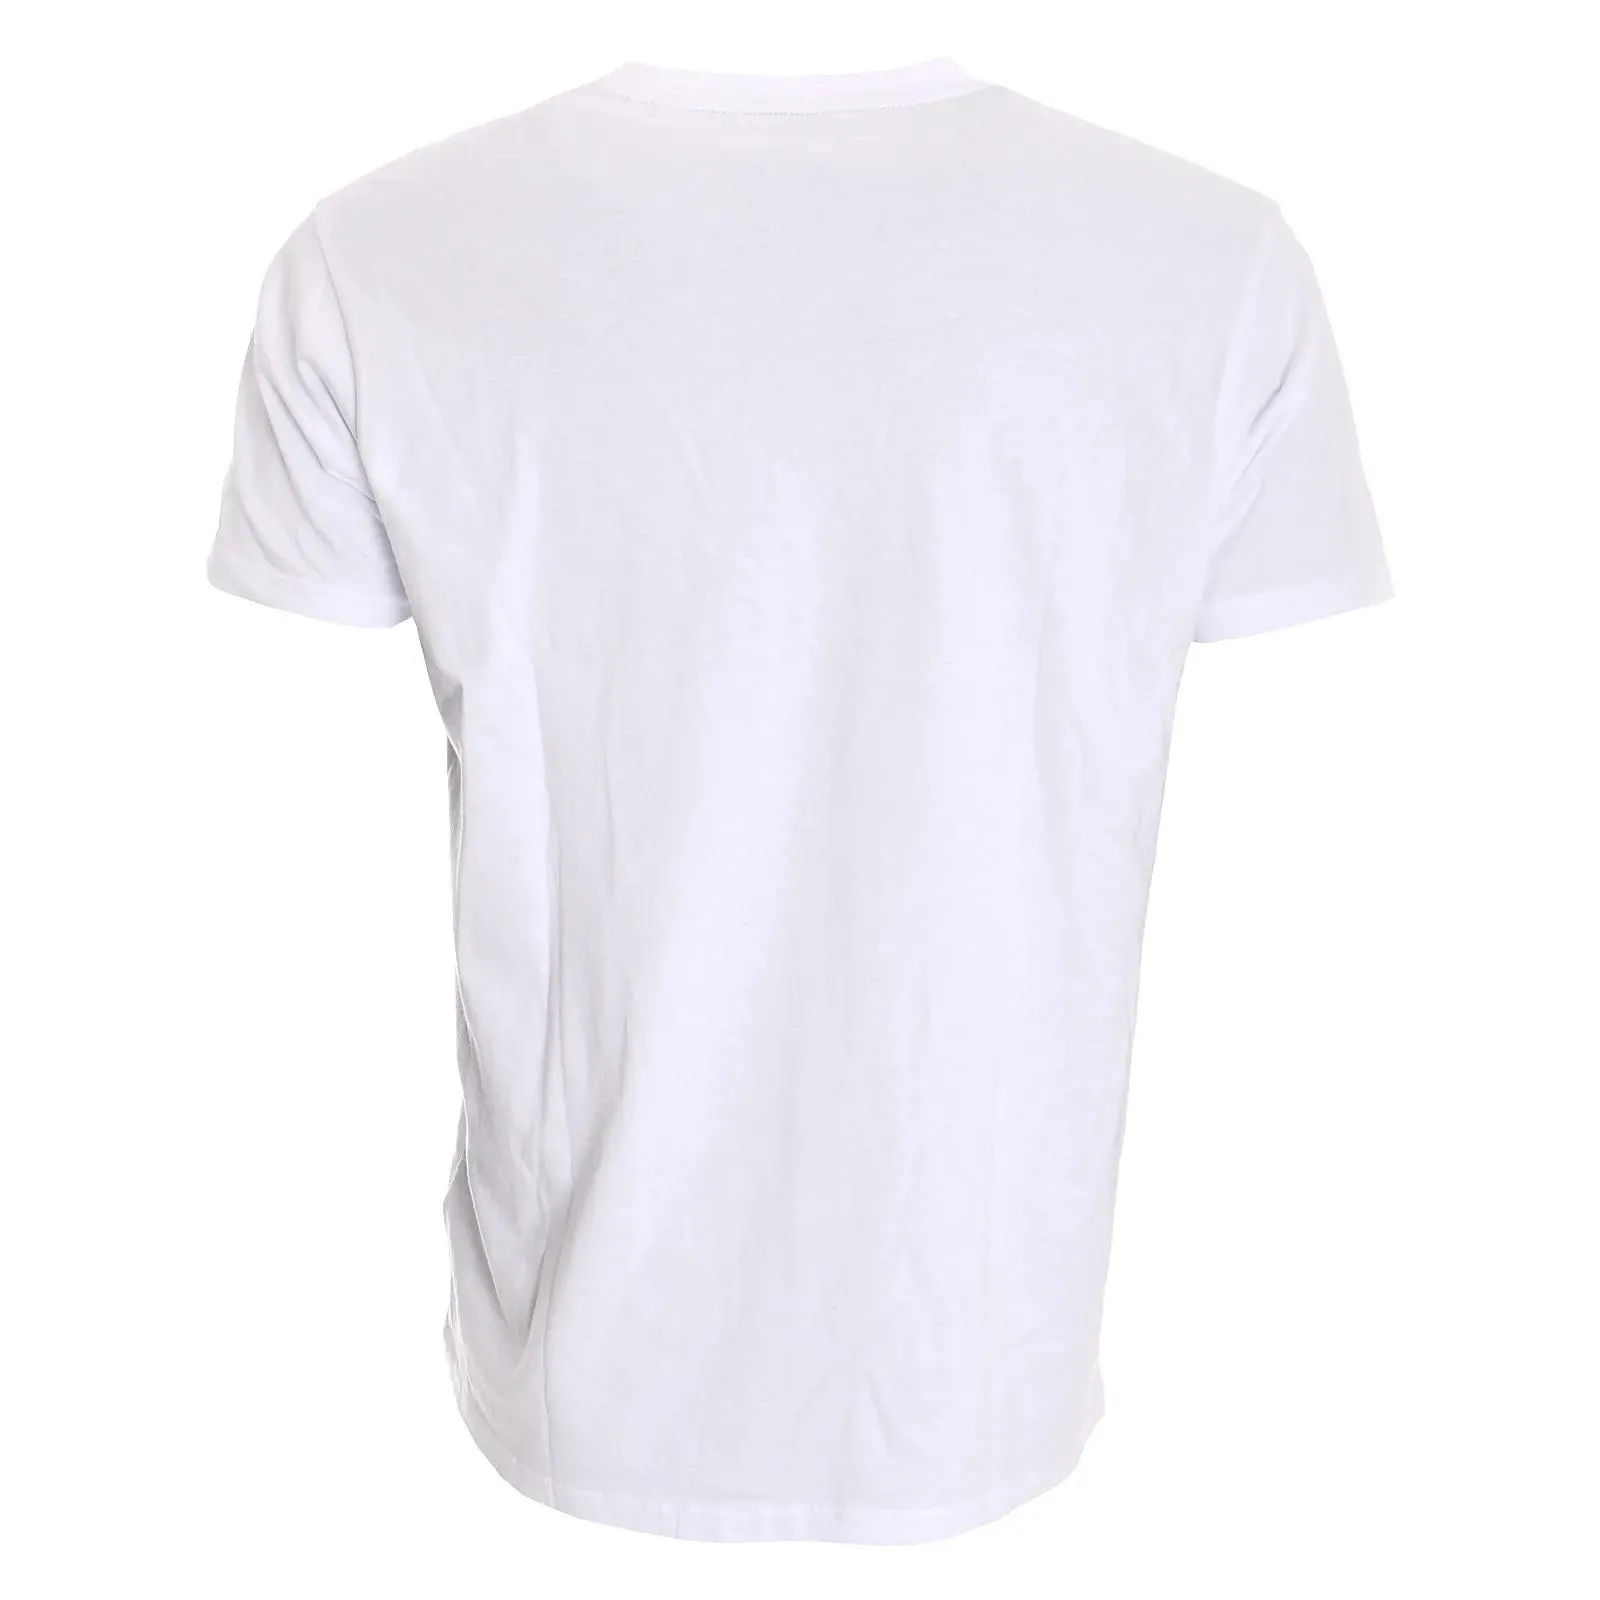 Lonsdale T-shirt MENS BOXING T-SHIRT 